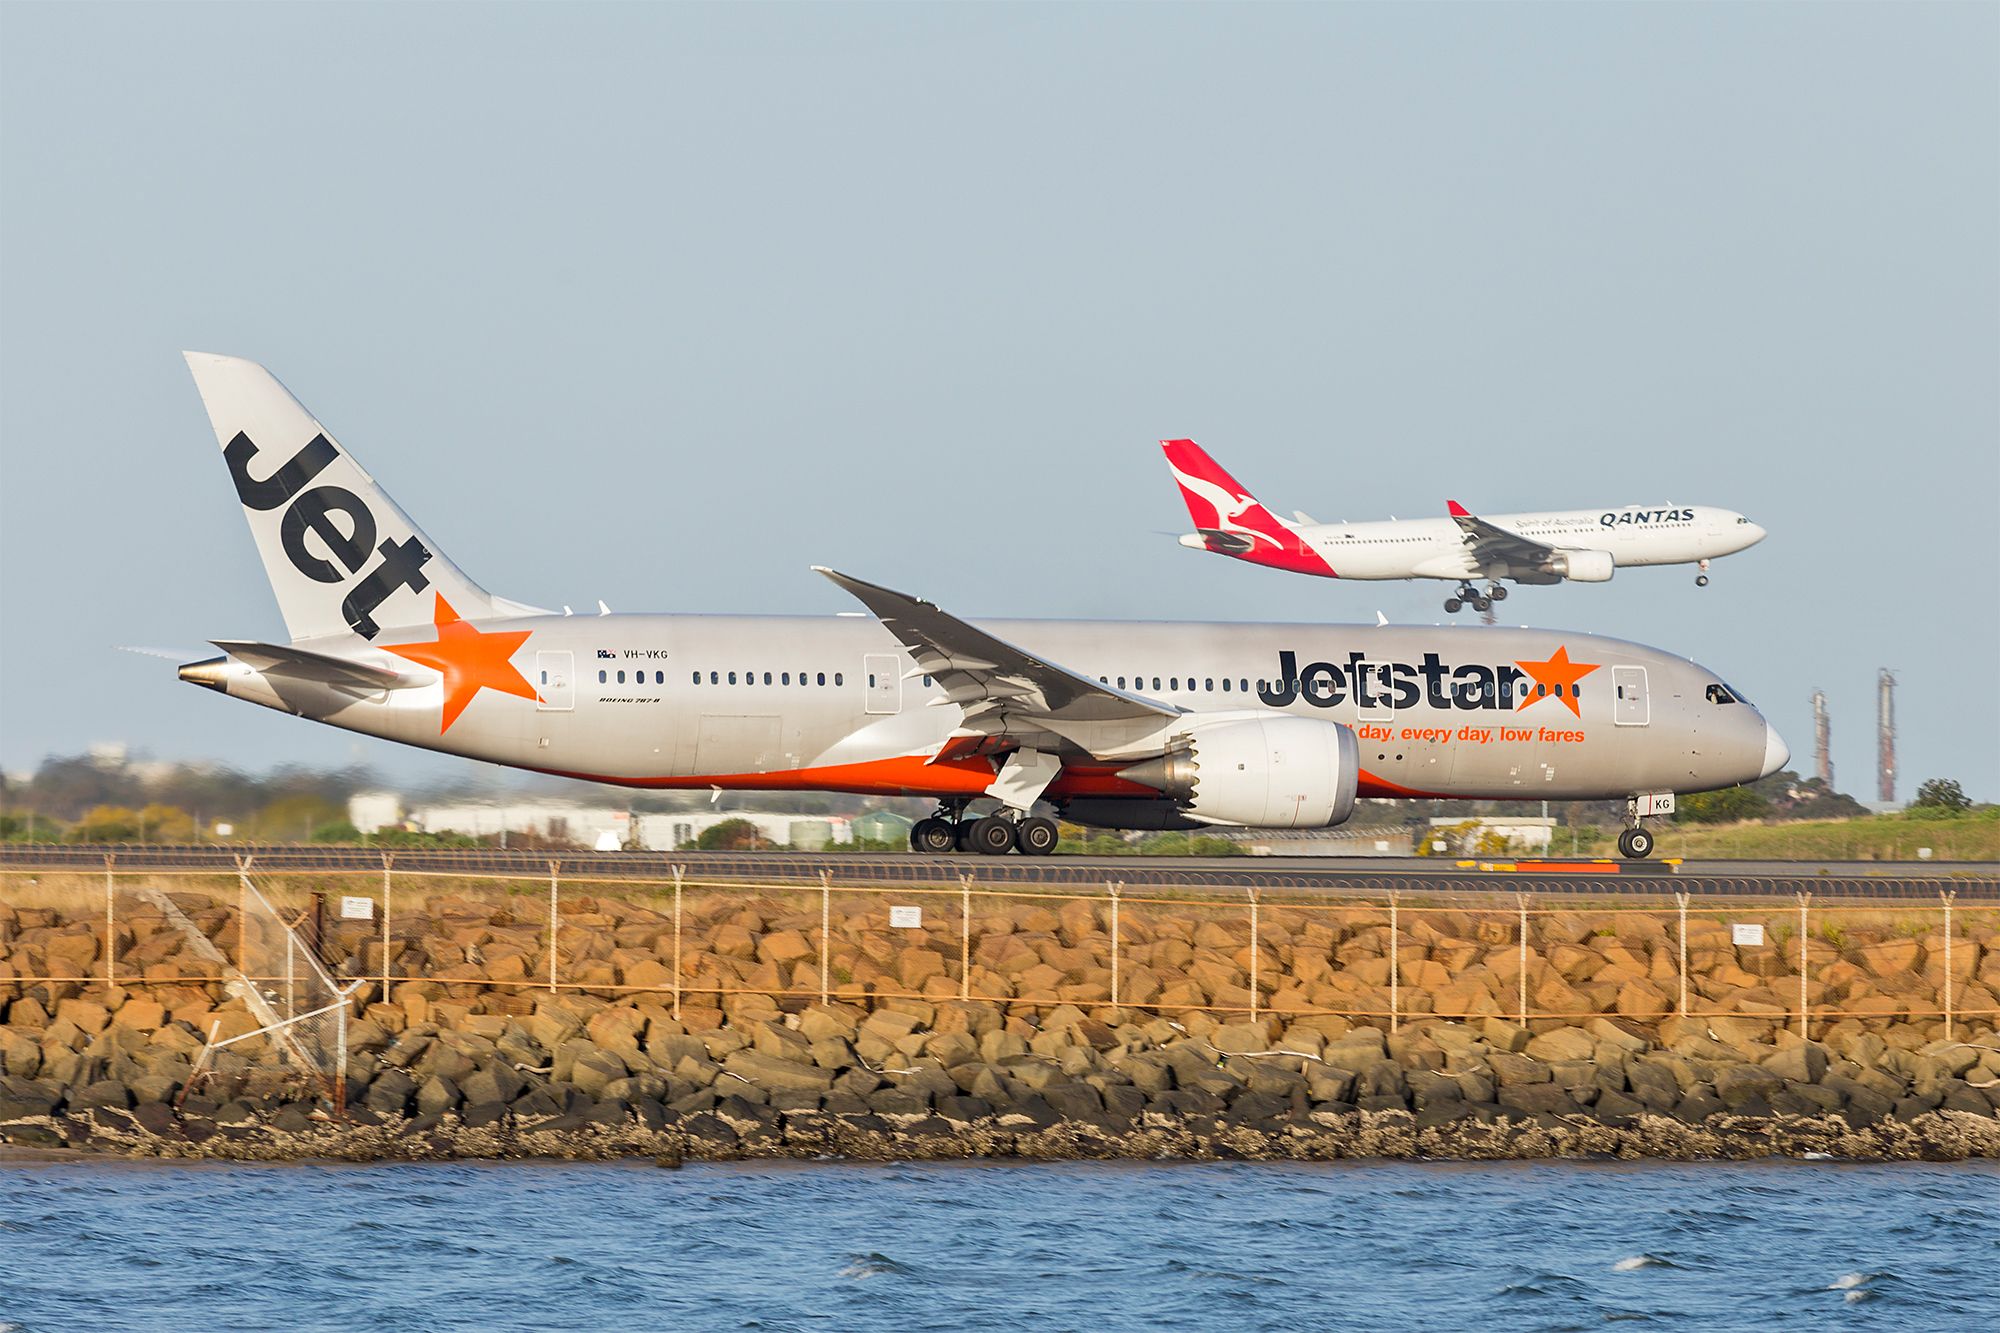 Jetstar Boeing 787-8 and Qantas Airbus A330